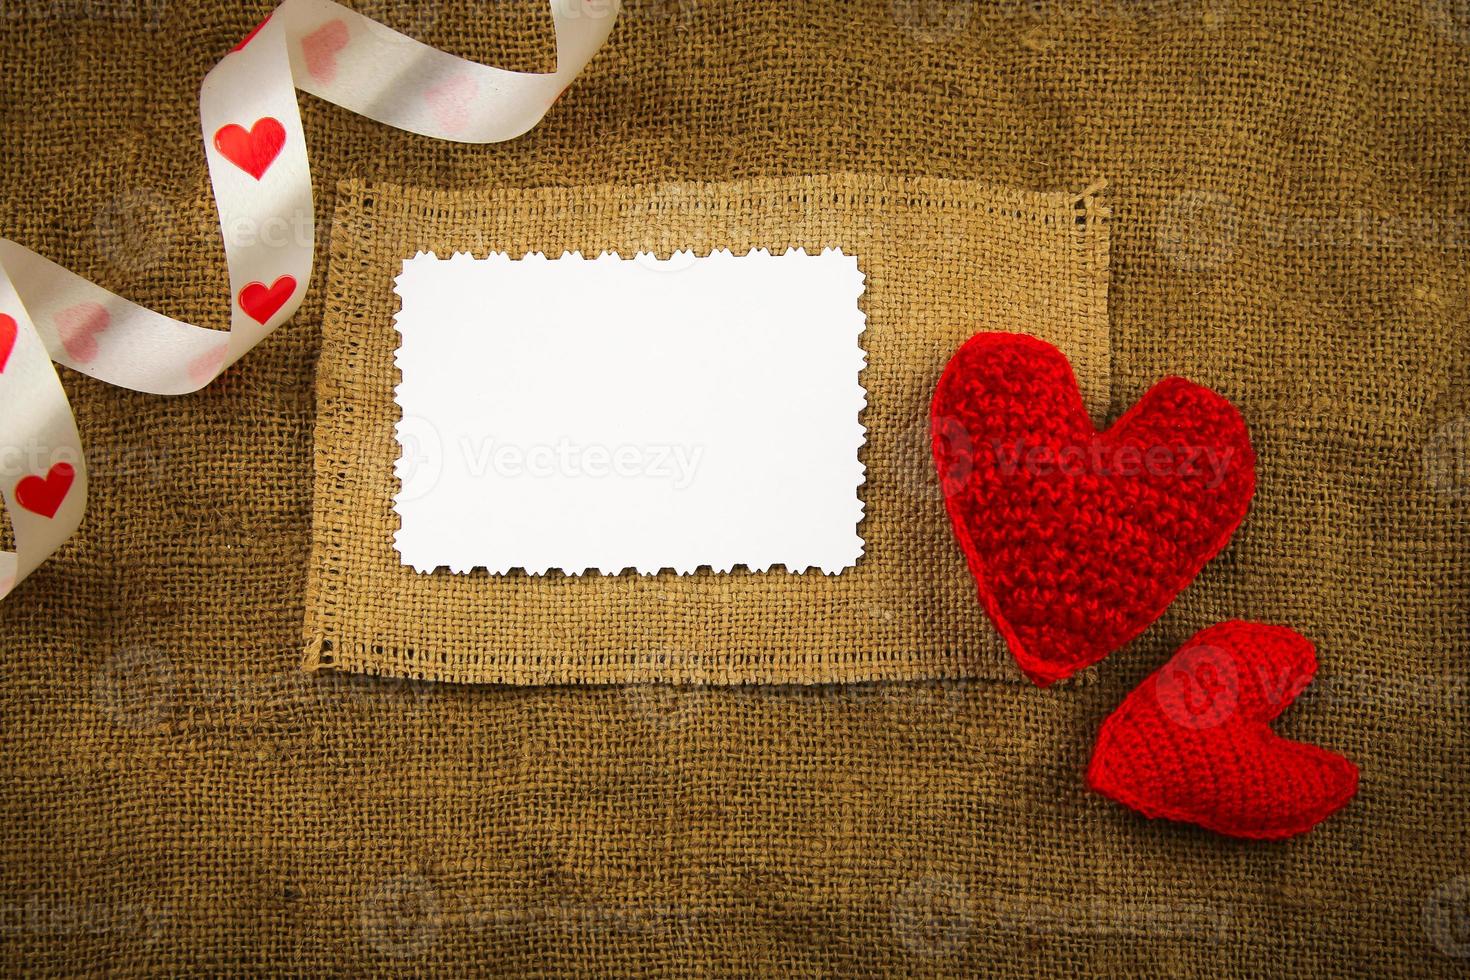 Knitting hearts on the sackcloth photo